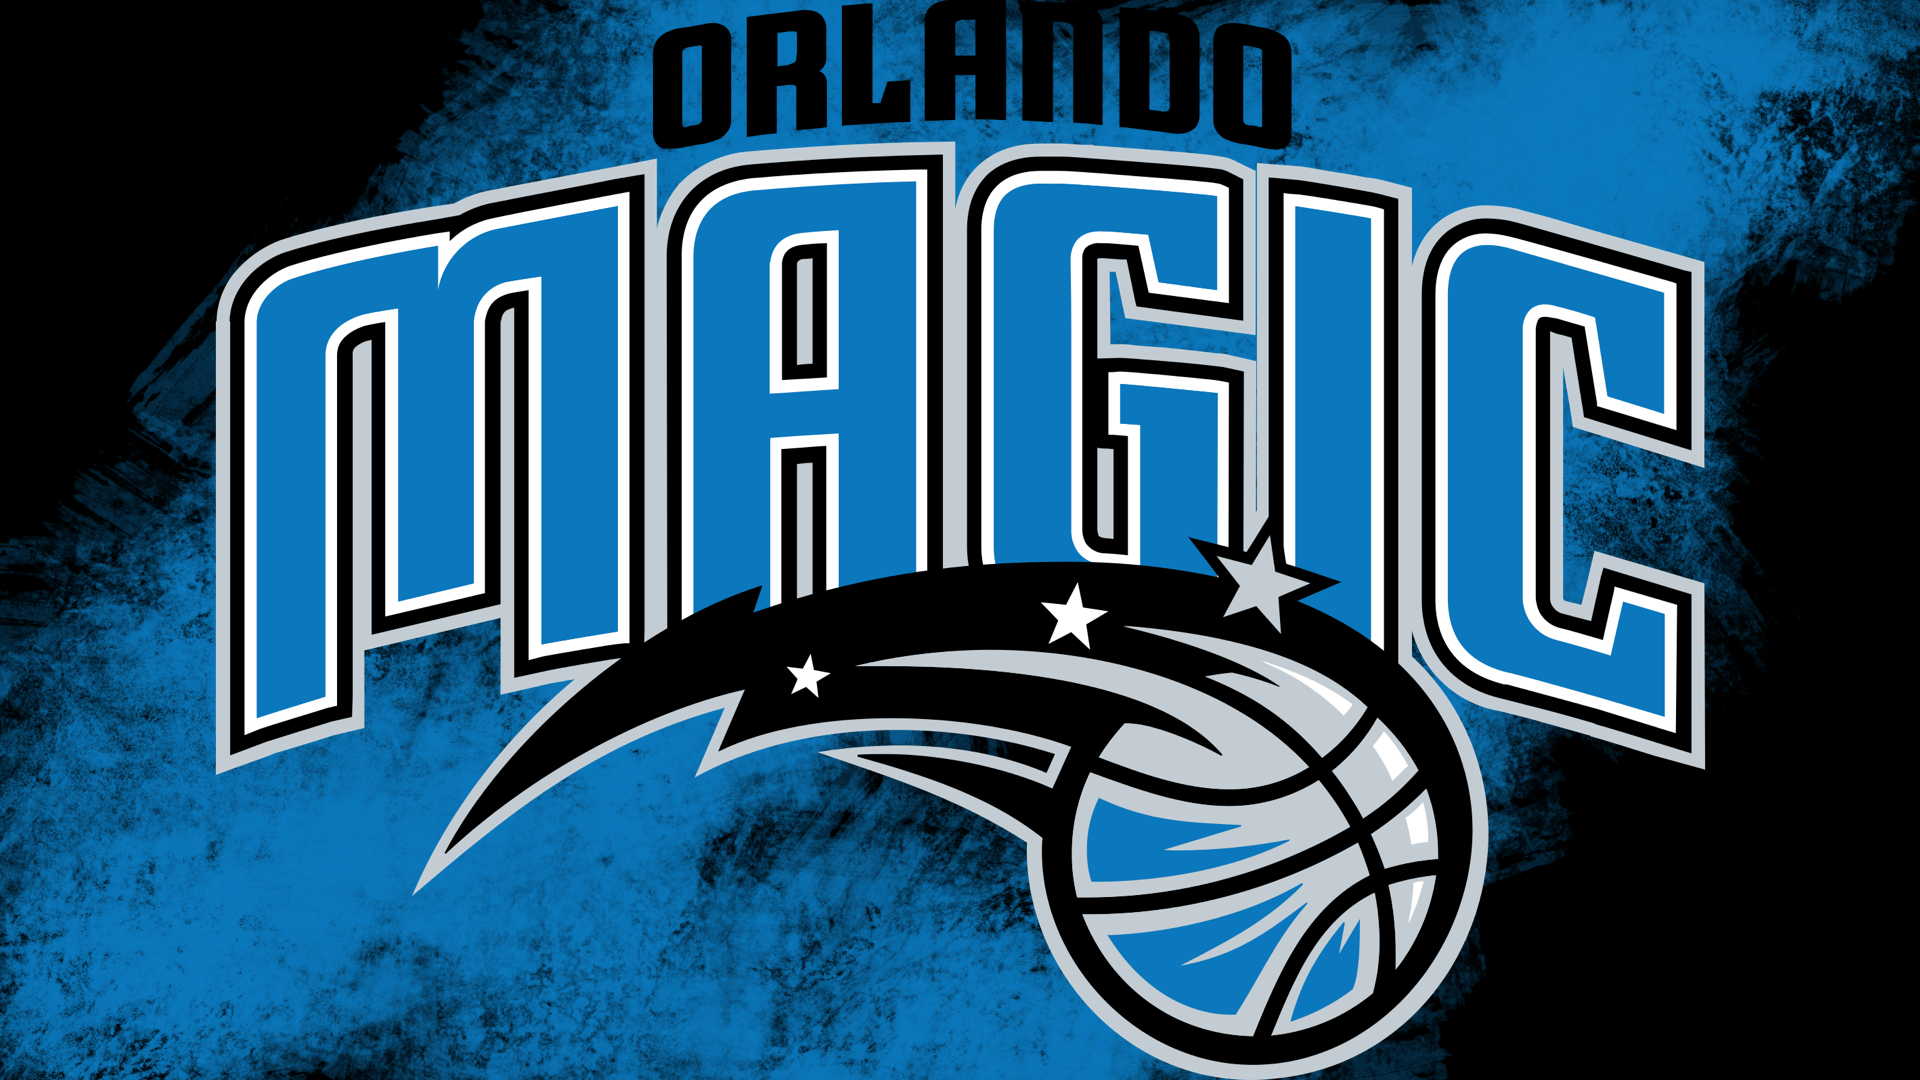 magic logo png